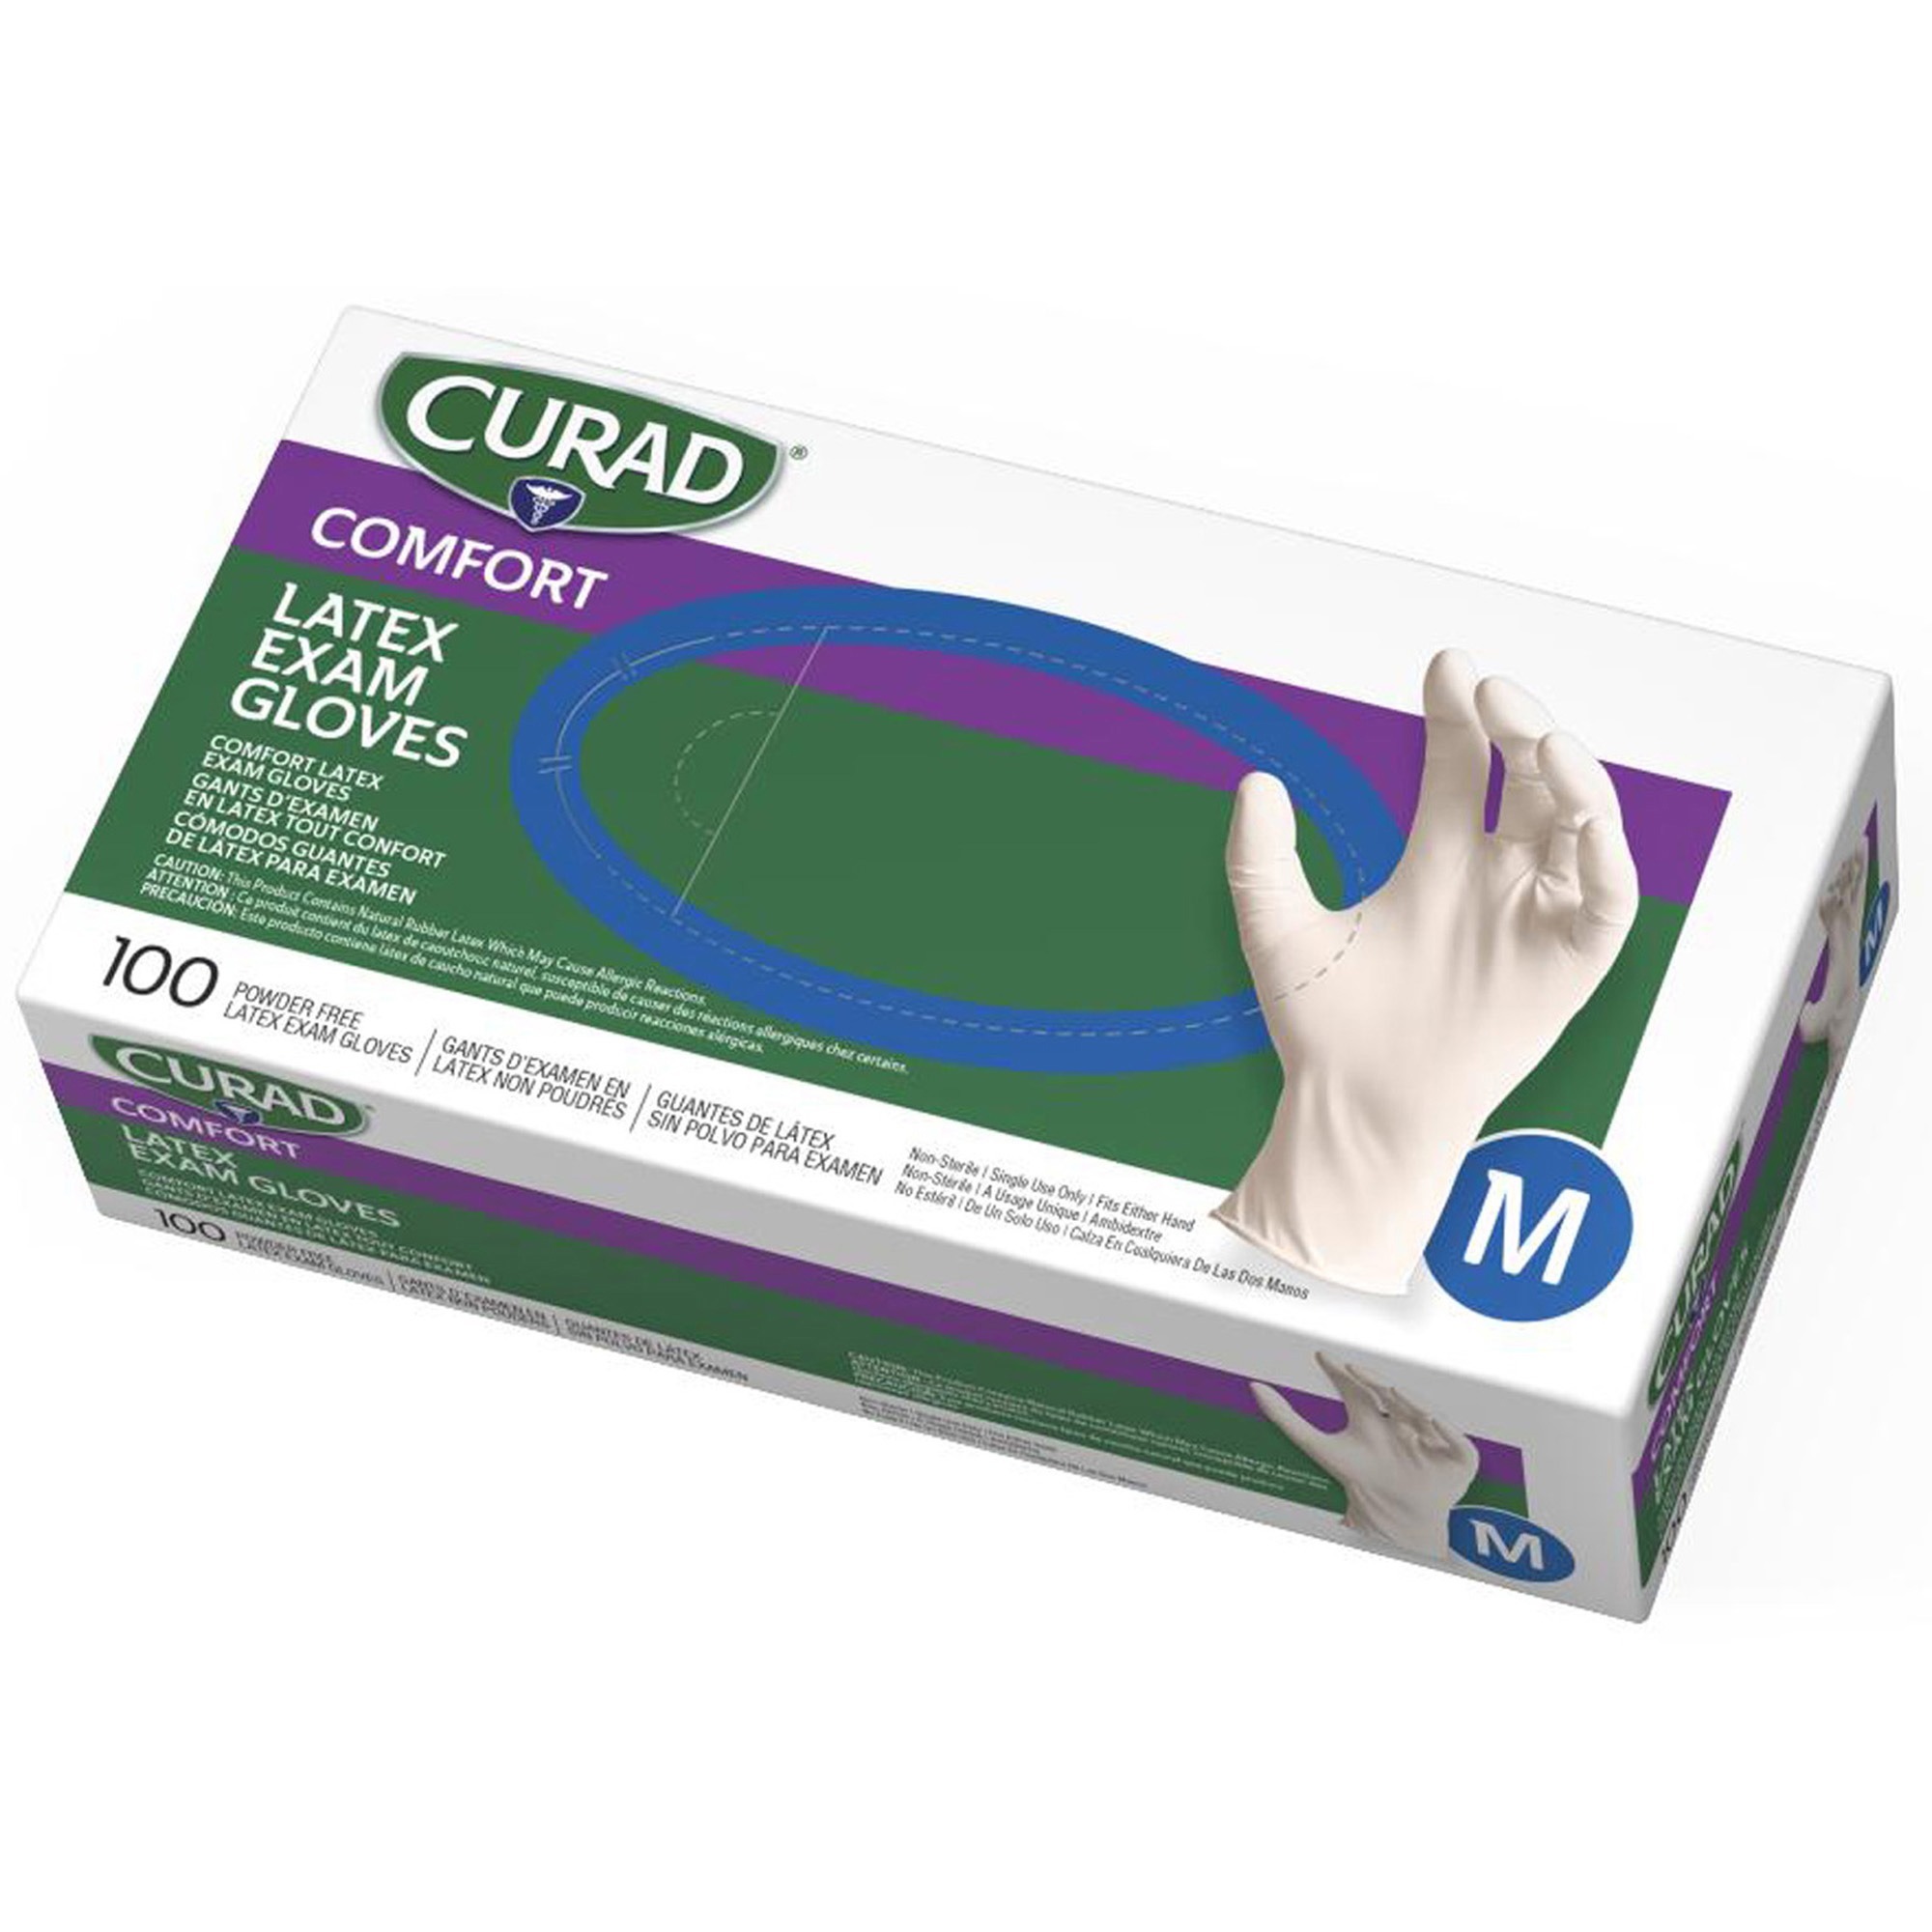 Curad Powder Free Latex Exam Gloves - Medium Size - Latex - White ...